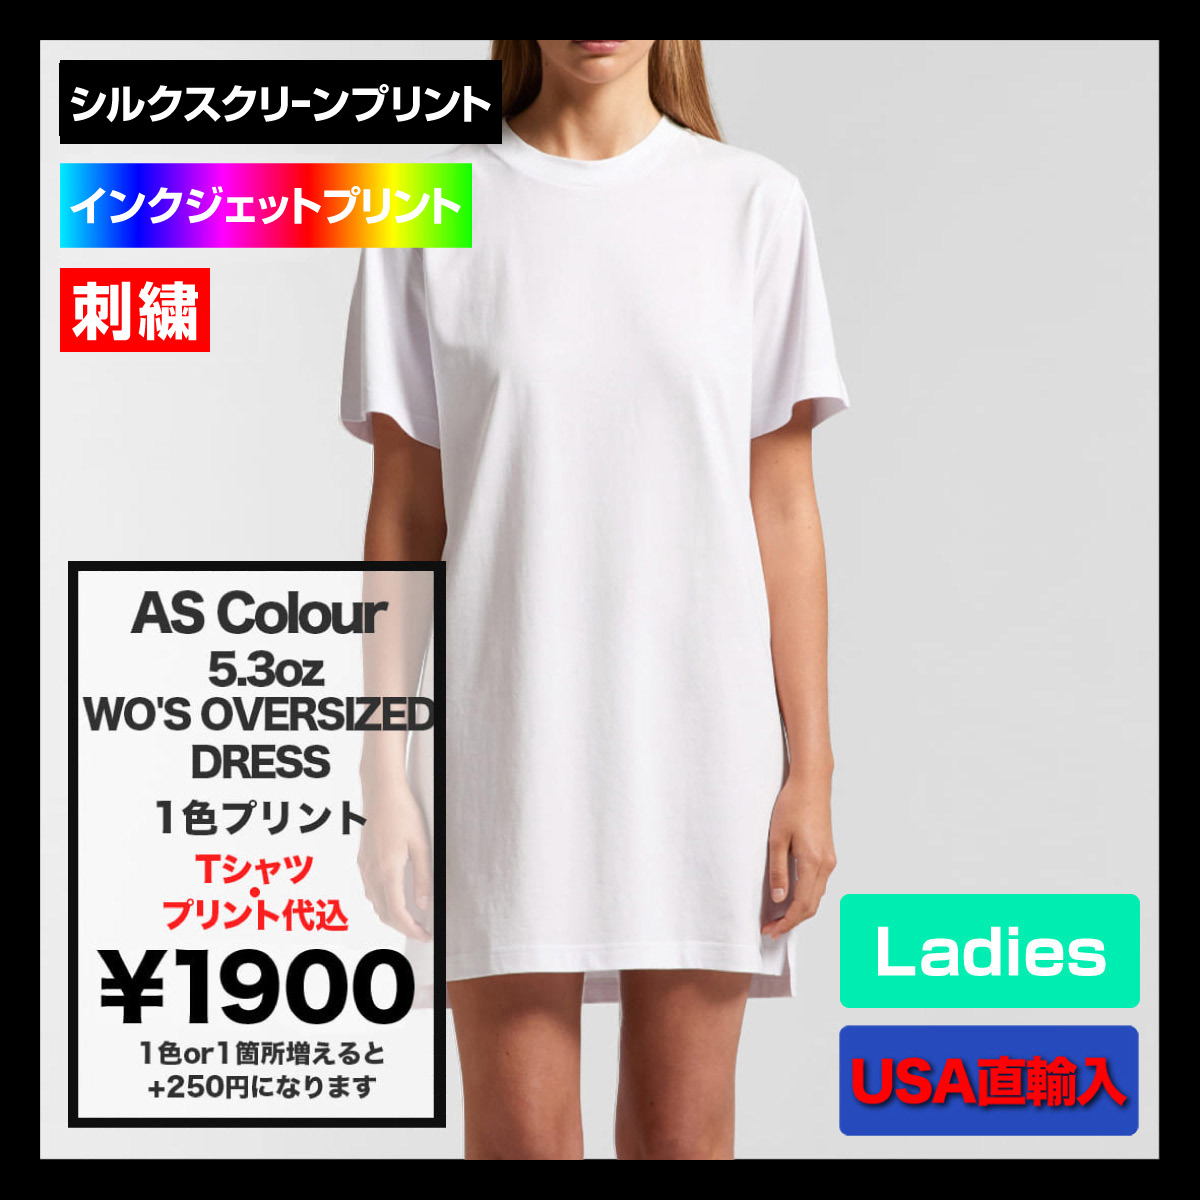 AS Colour アズカラー 5.3 oz WO'S OVERSIZED DRESS (品番4018US)